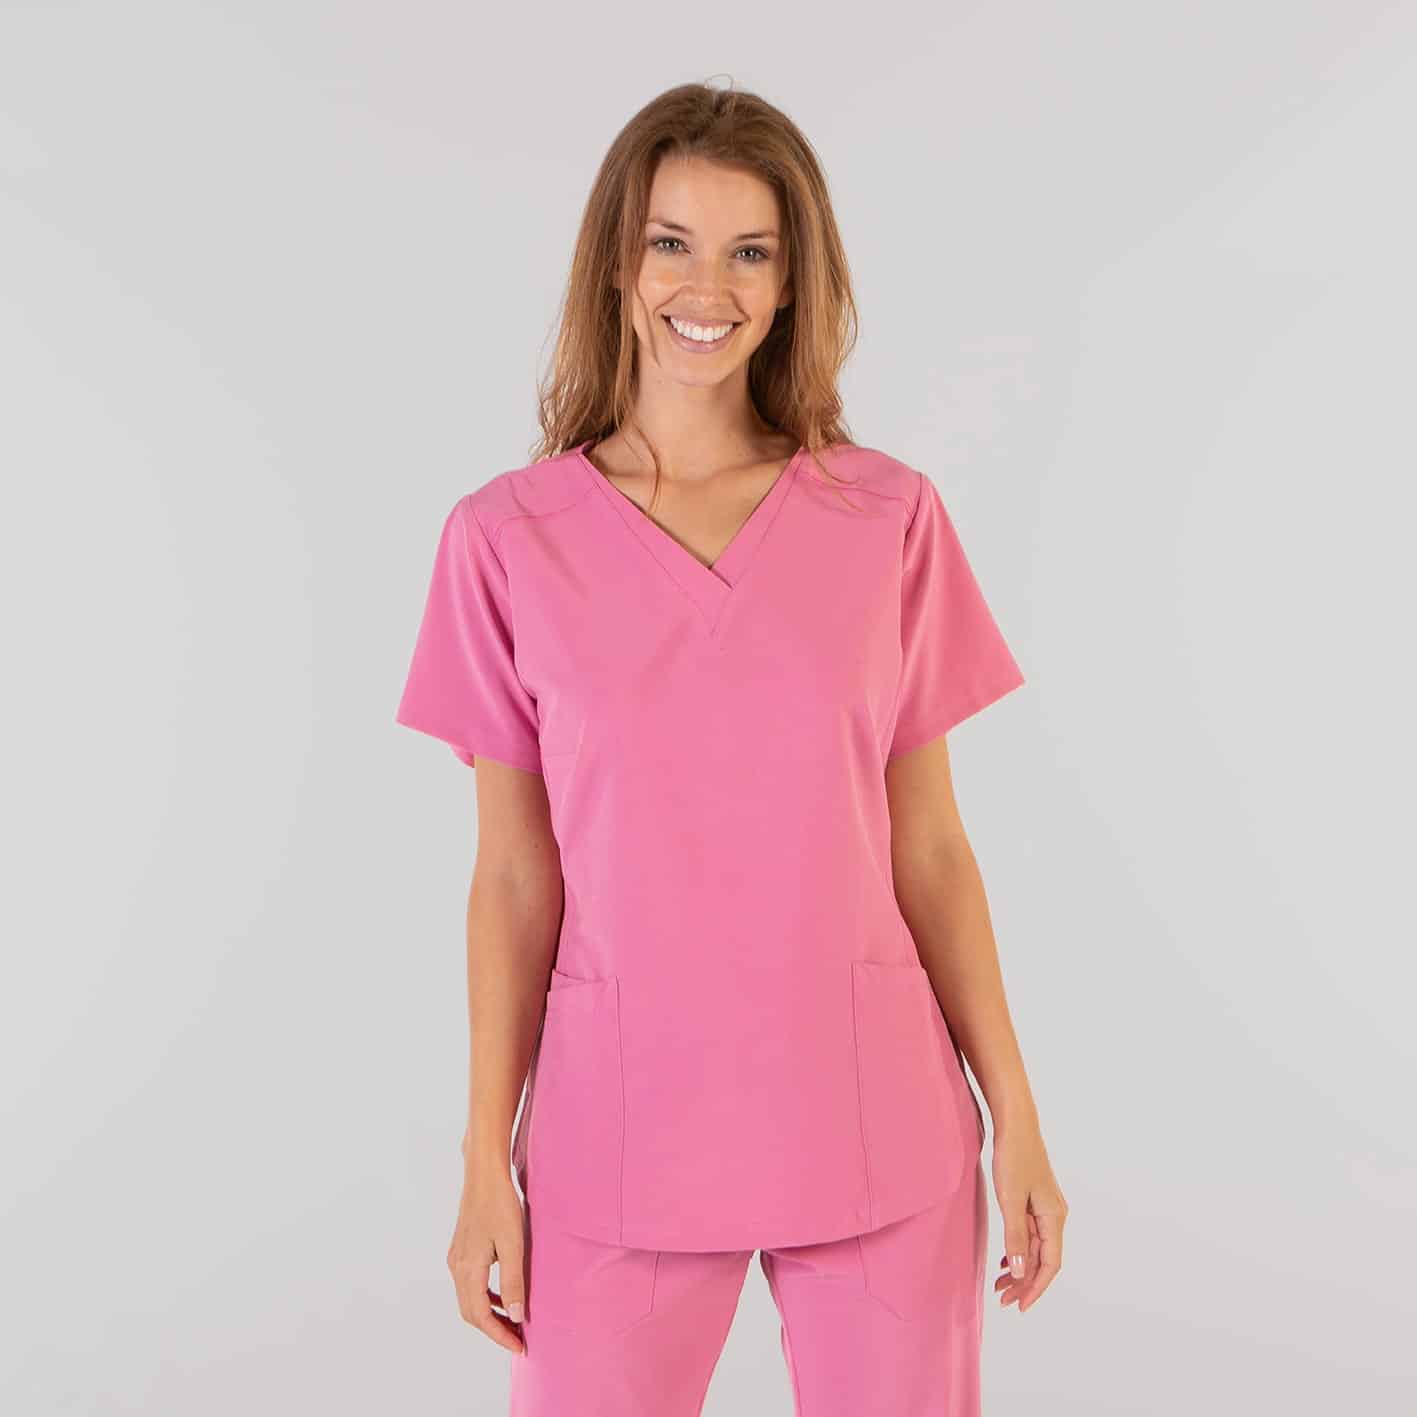 rosalia-rosa-casacca-microfibra-infermiera-oss-min